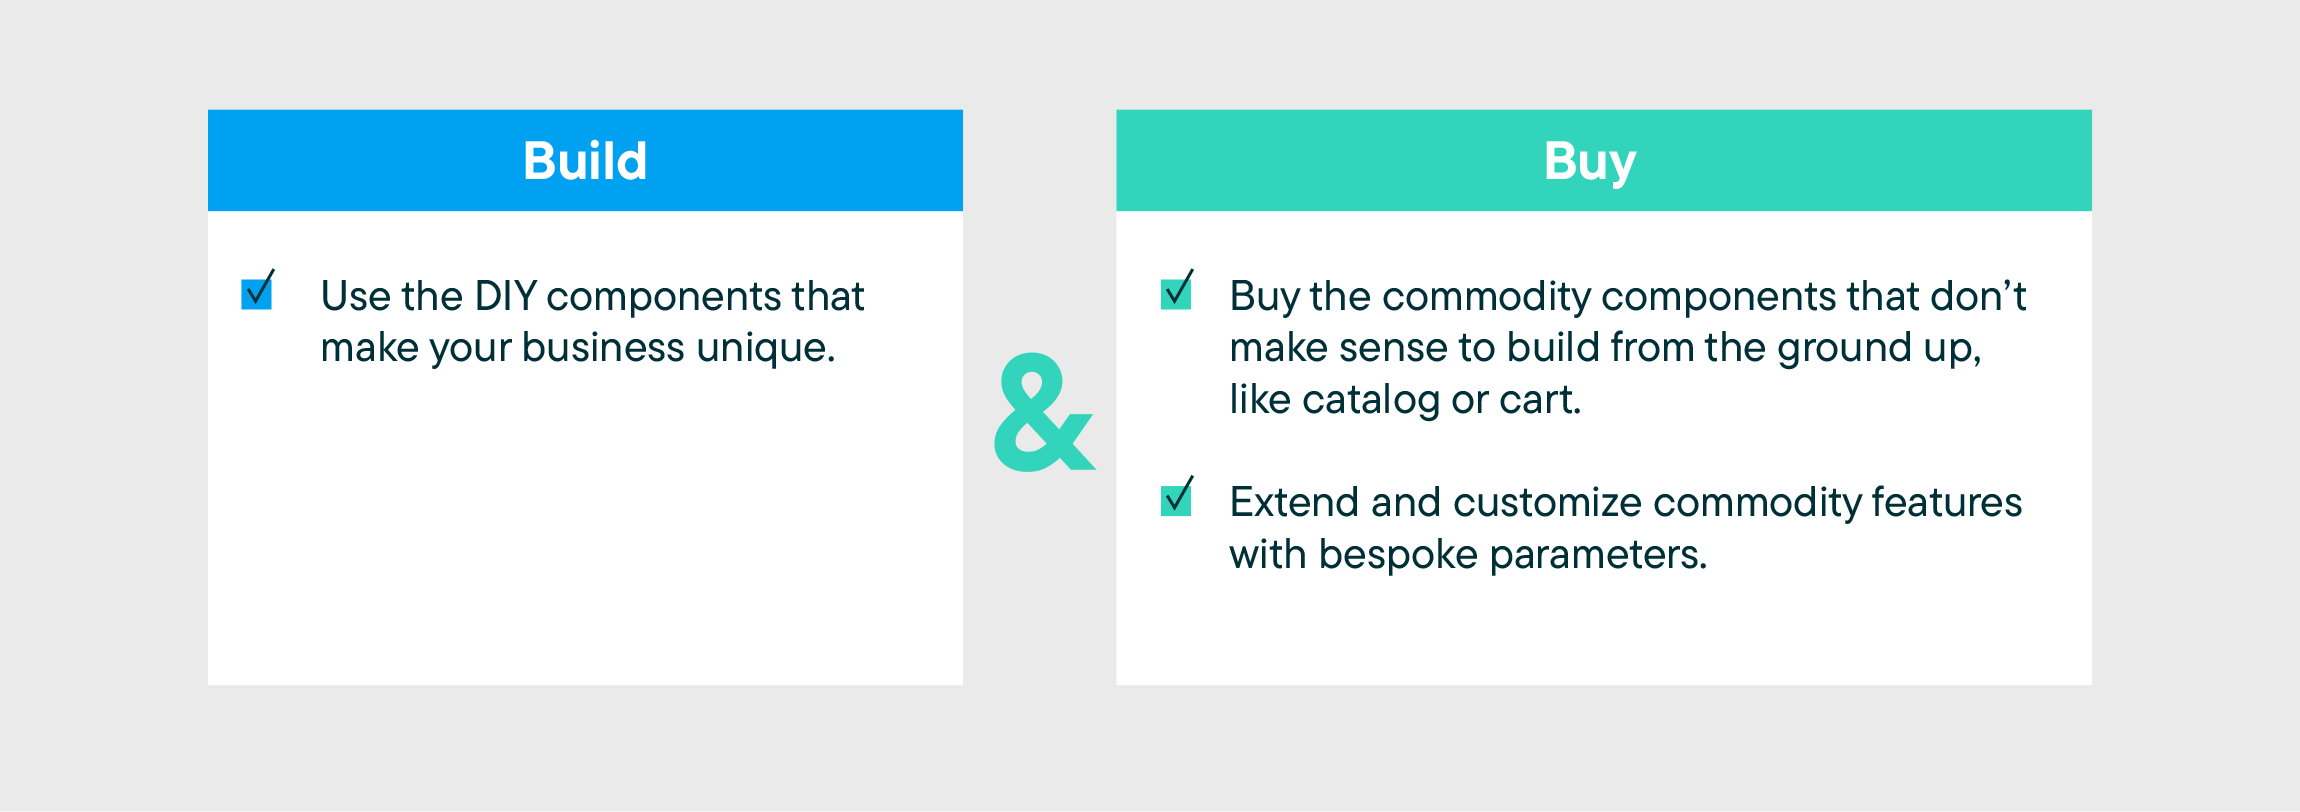 A comparison of build vs. buy in digital commerce